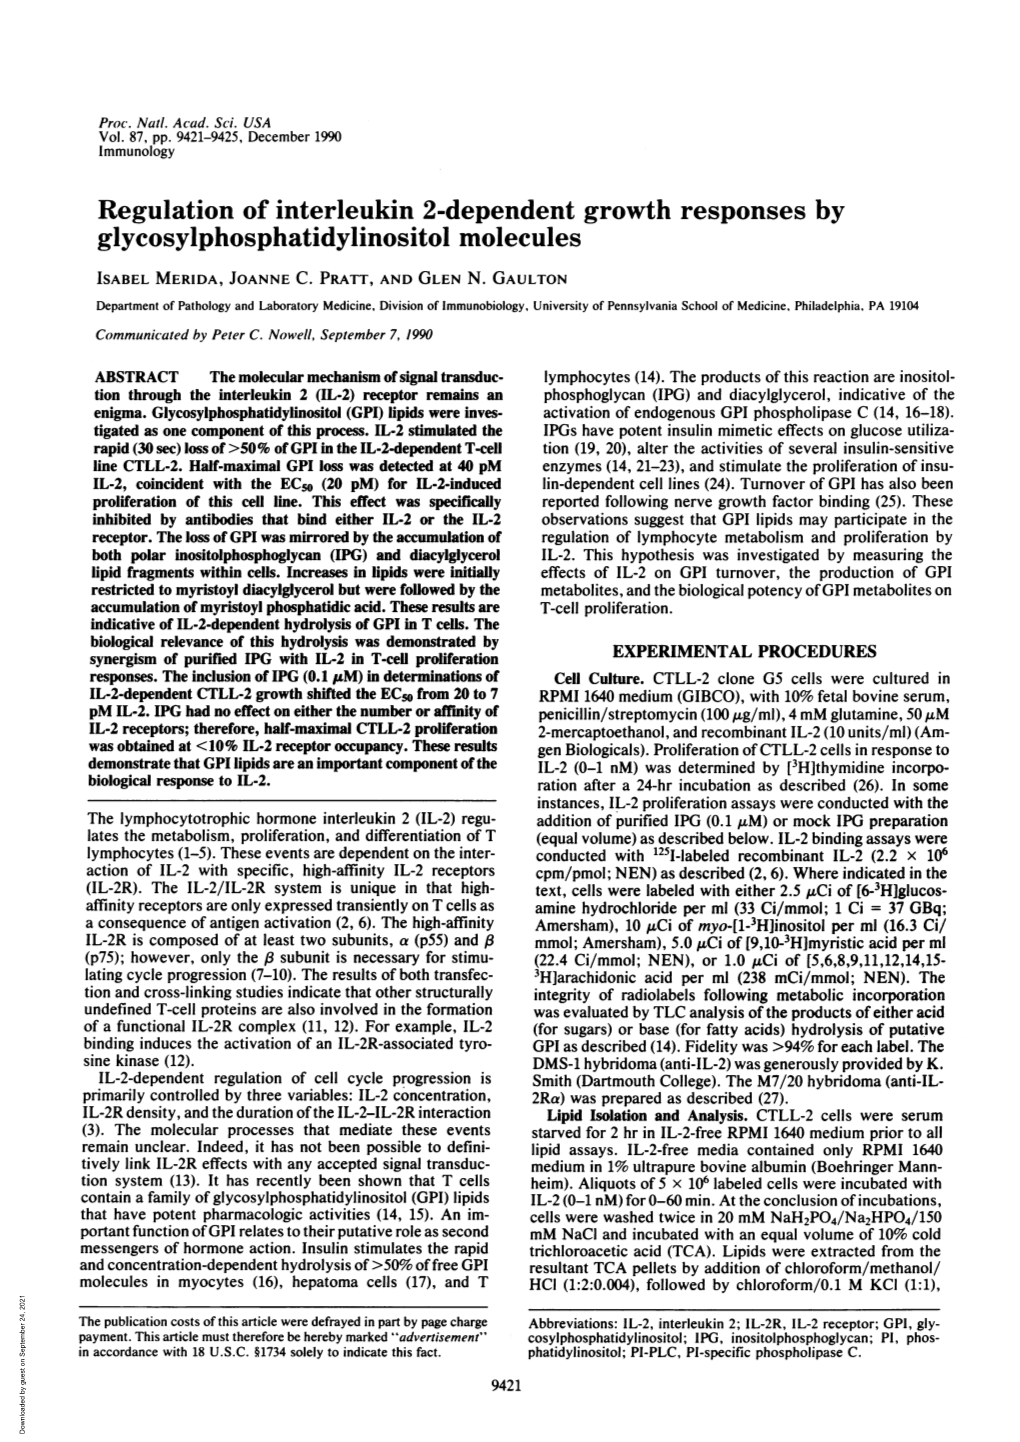 Glycosylphosphatidylinositol Molecules ISABEL MERIDA, JOANNE C